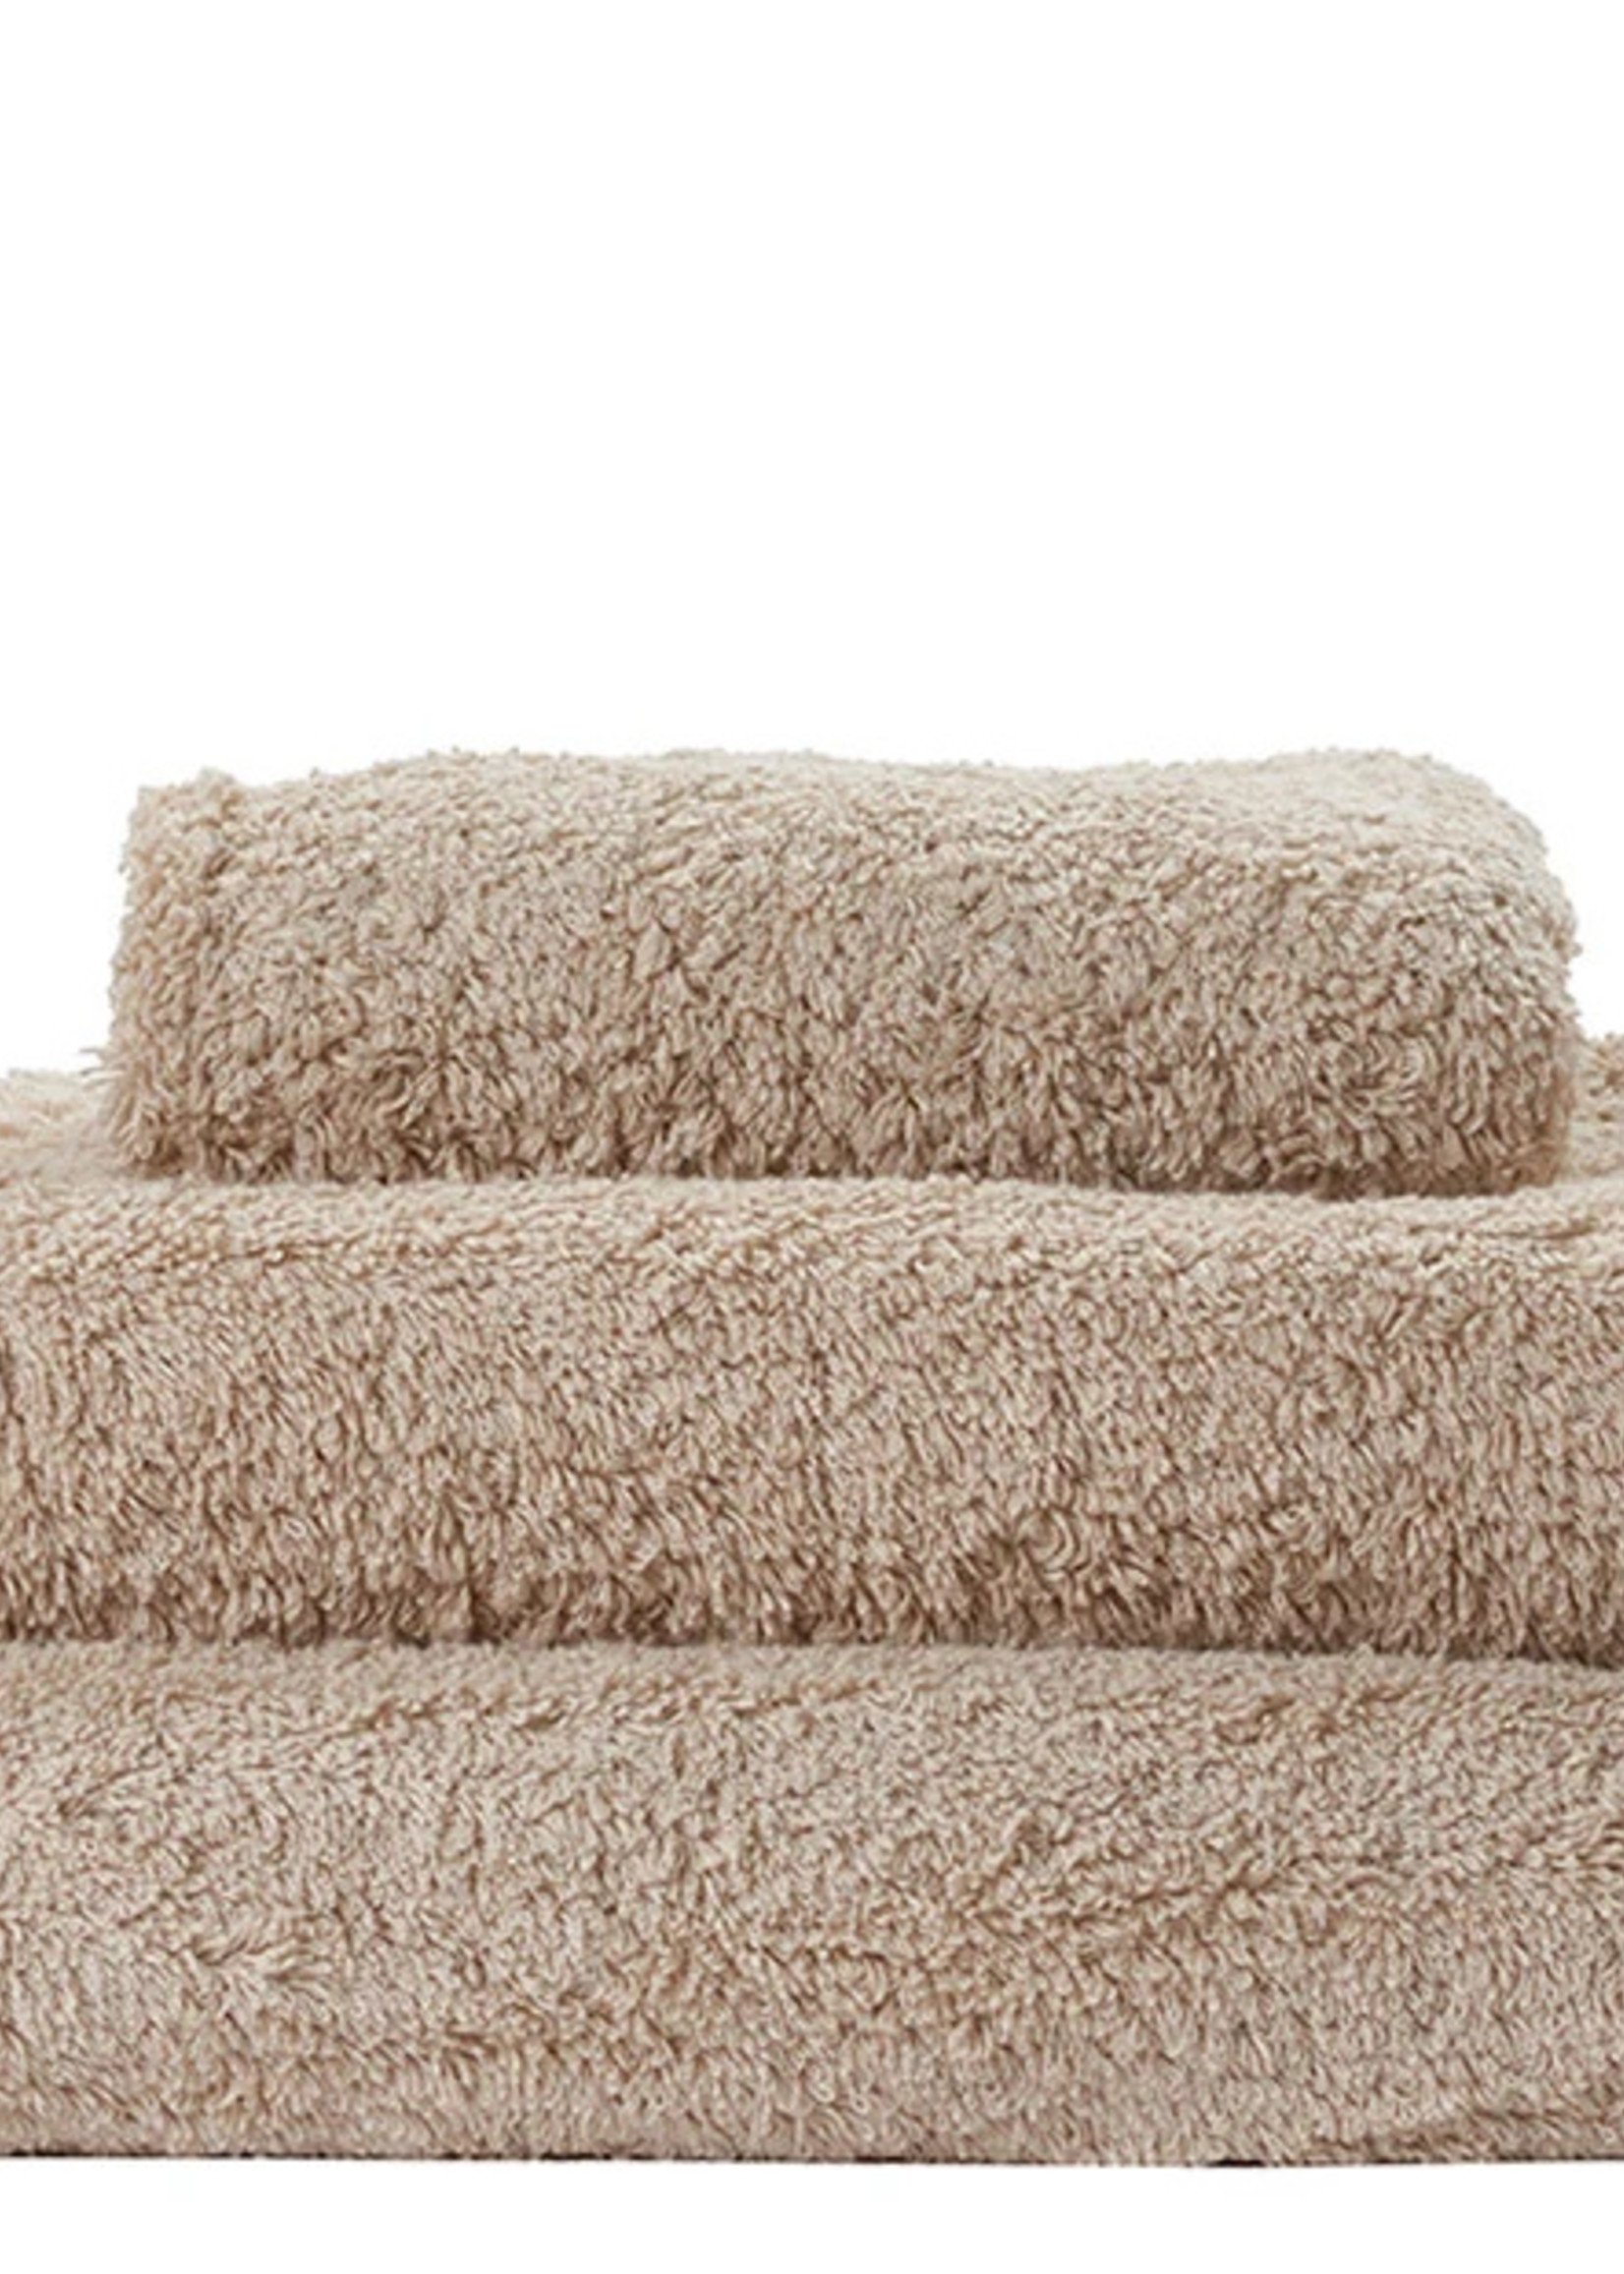 Abyss & Habidecor Super Pile Linen Towels